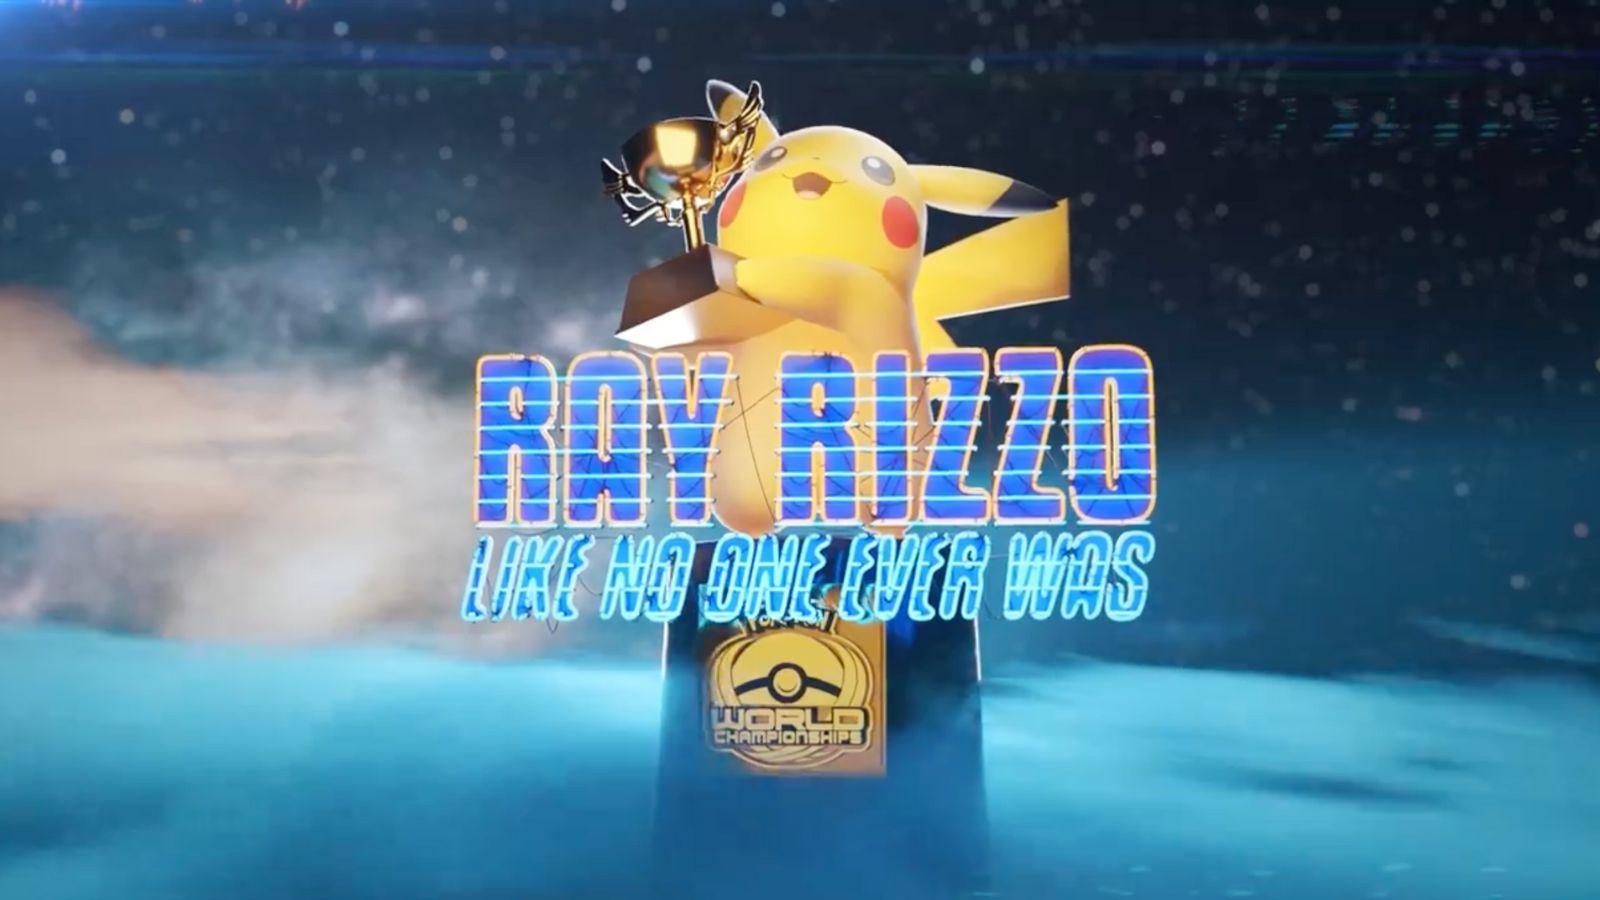 Ray Rizzo biopic cover